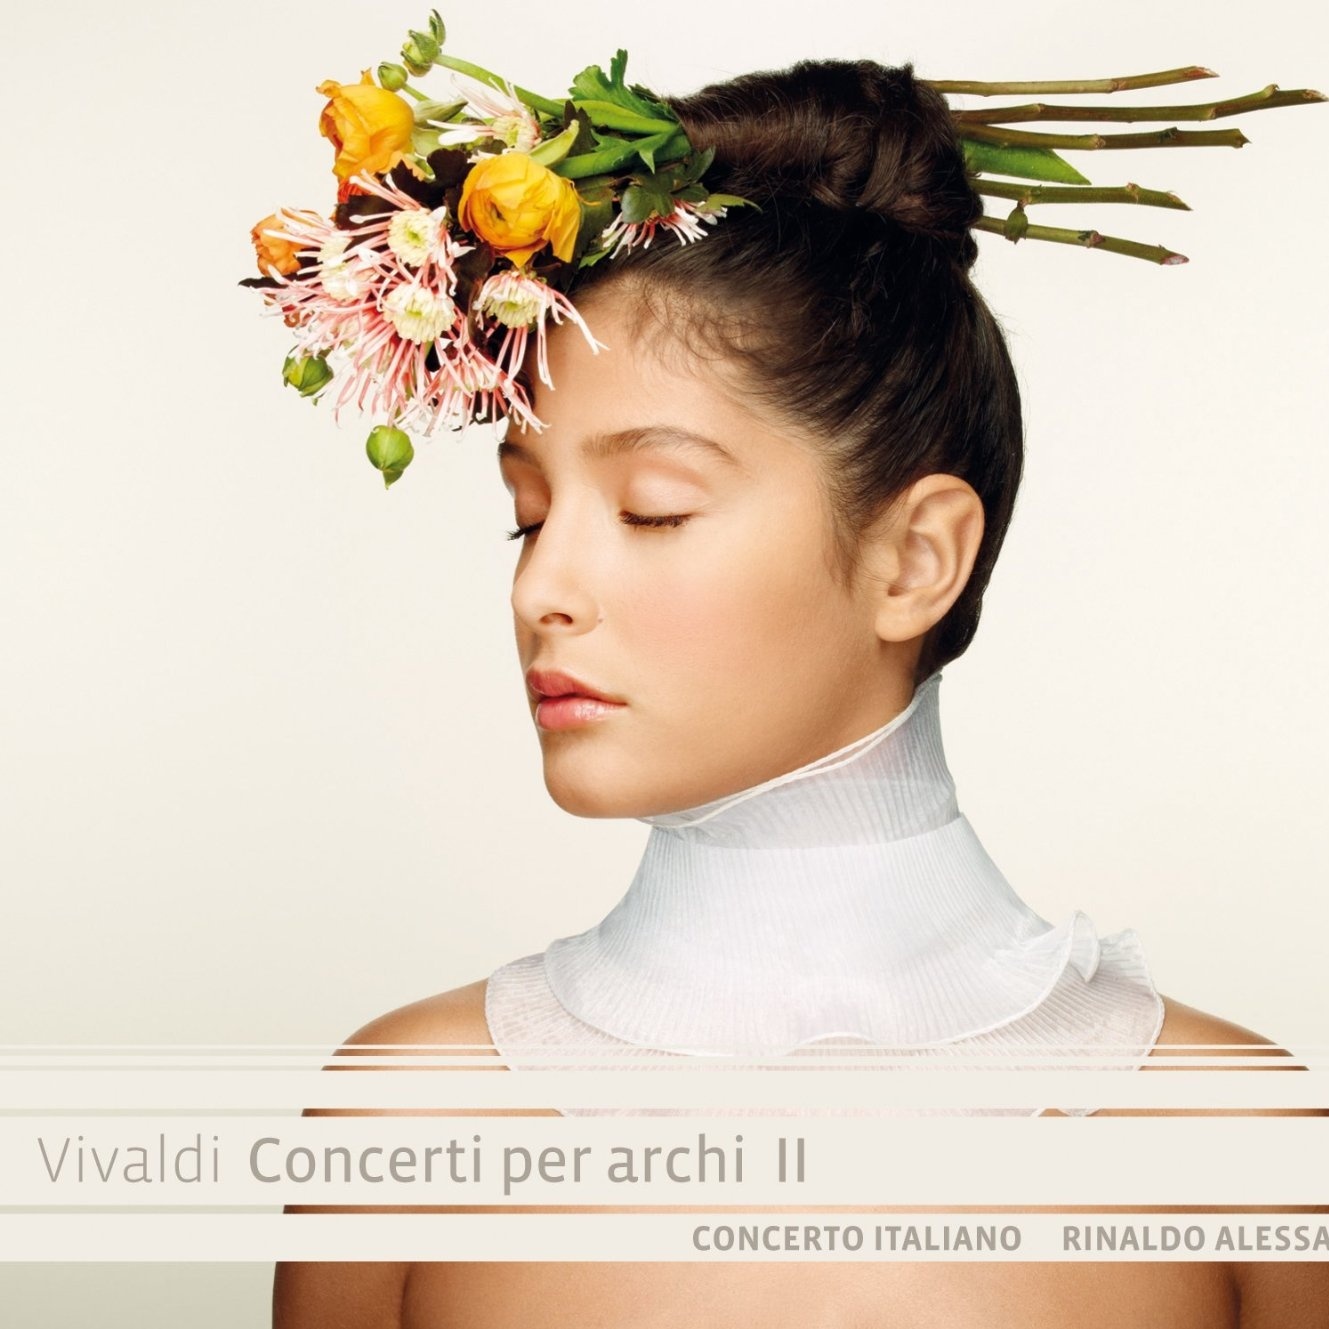 Antonio Vivaldi: Concerto in G Major, RV 150 - I. Allegro